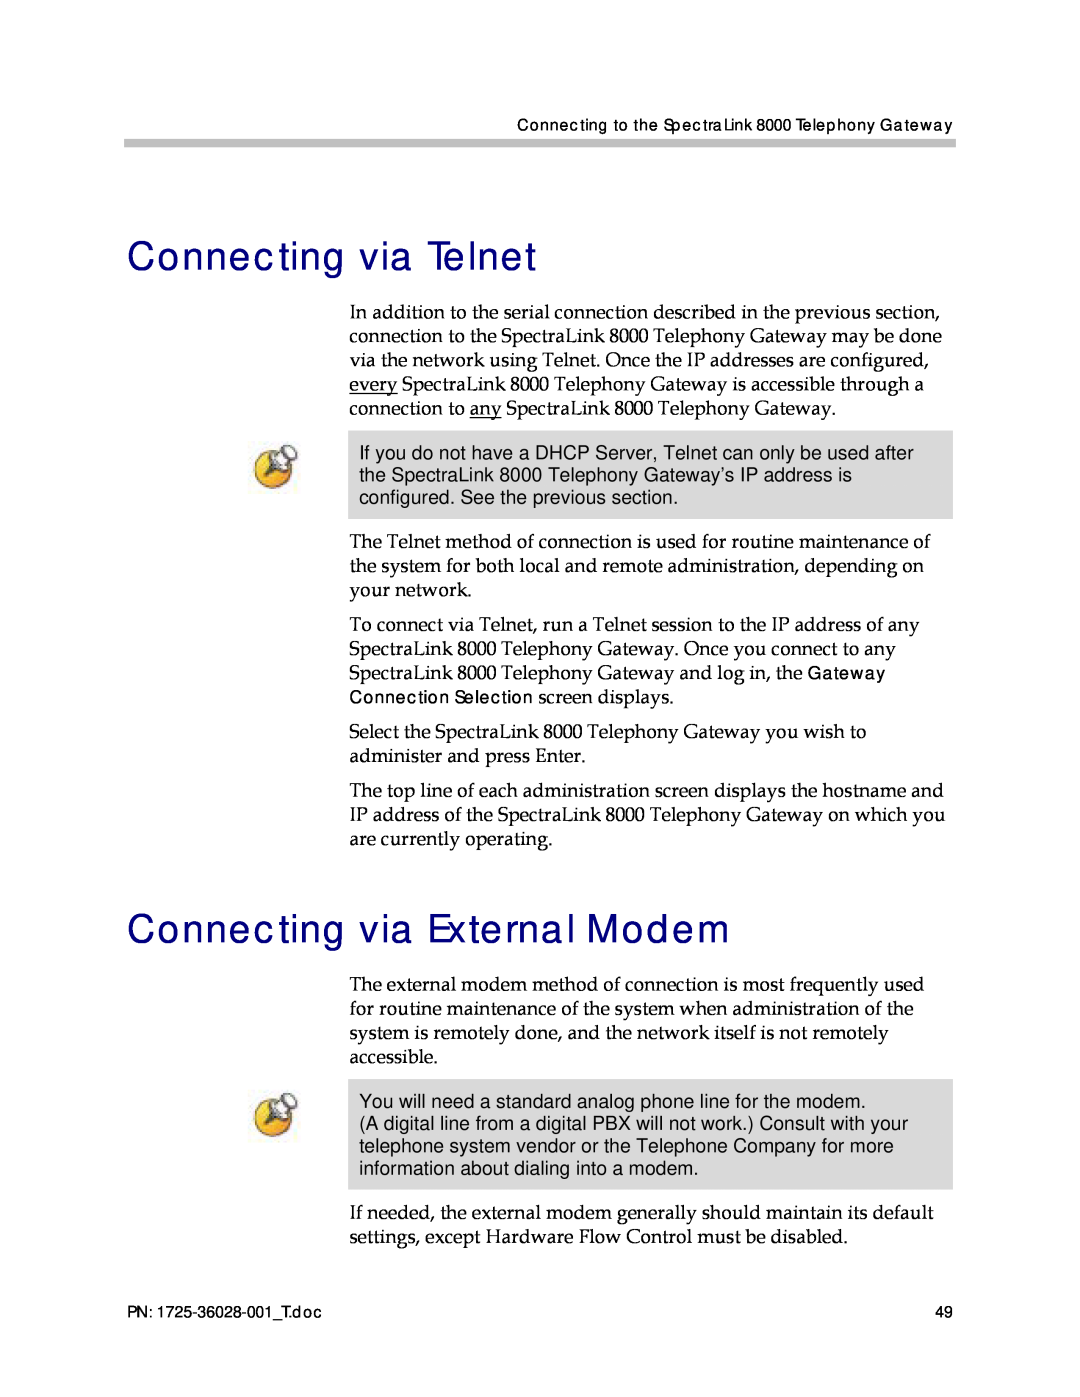 Polycom 1725-36028-001 manual Connecting via Telnet, Connecting via External Modem 